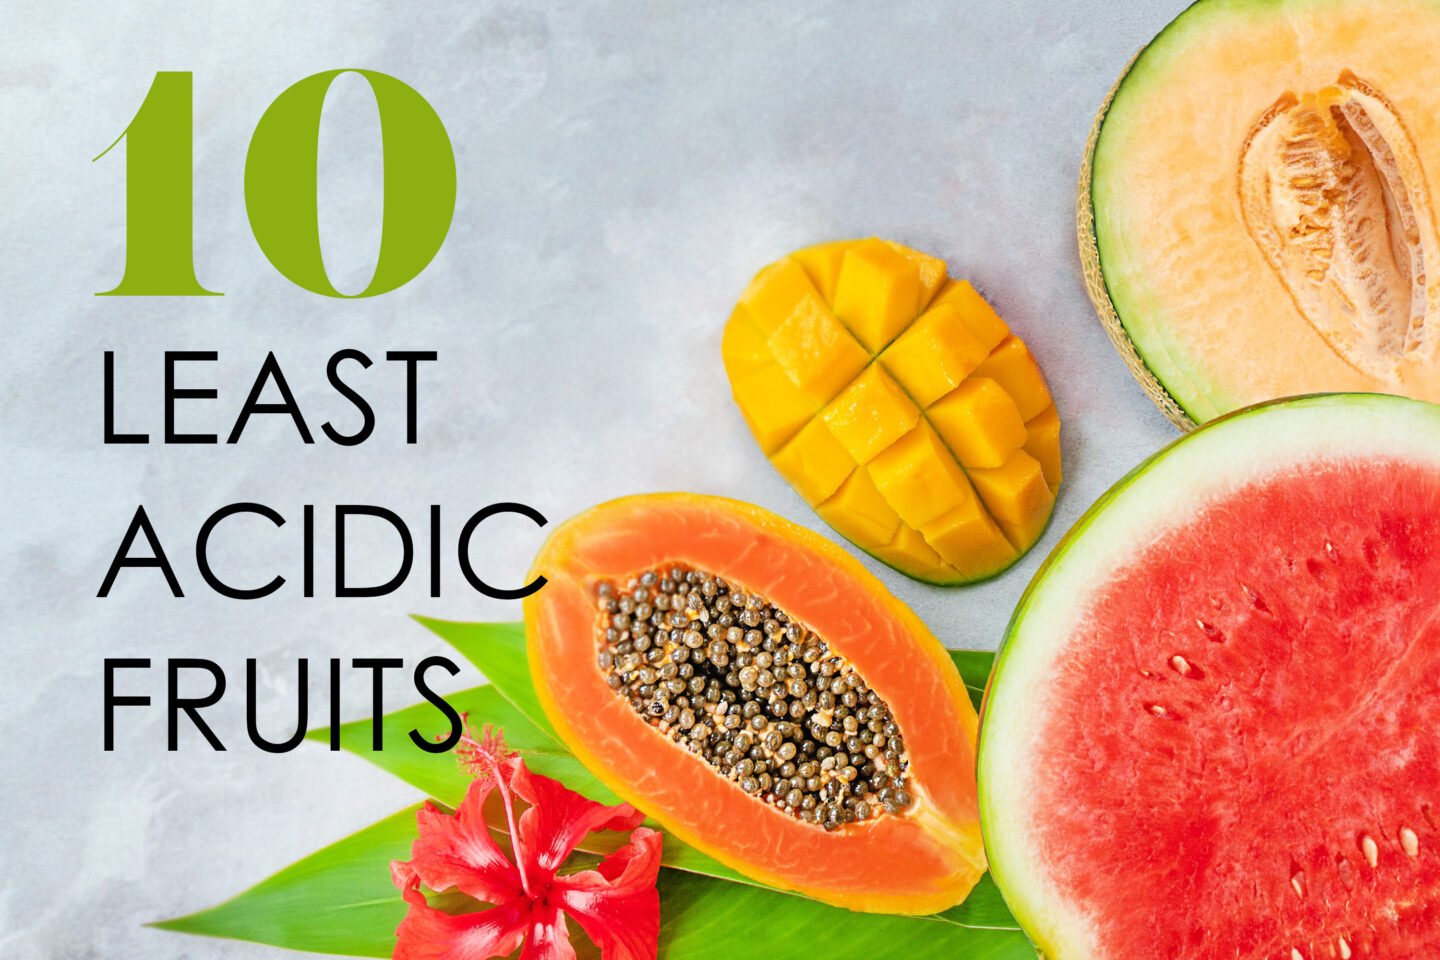 10 least acidic fruits